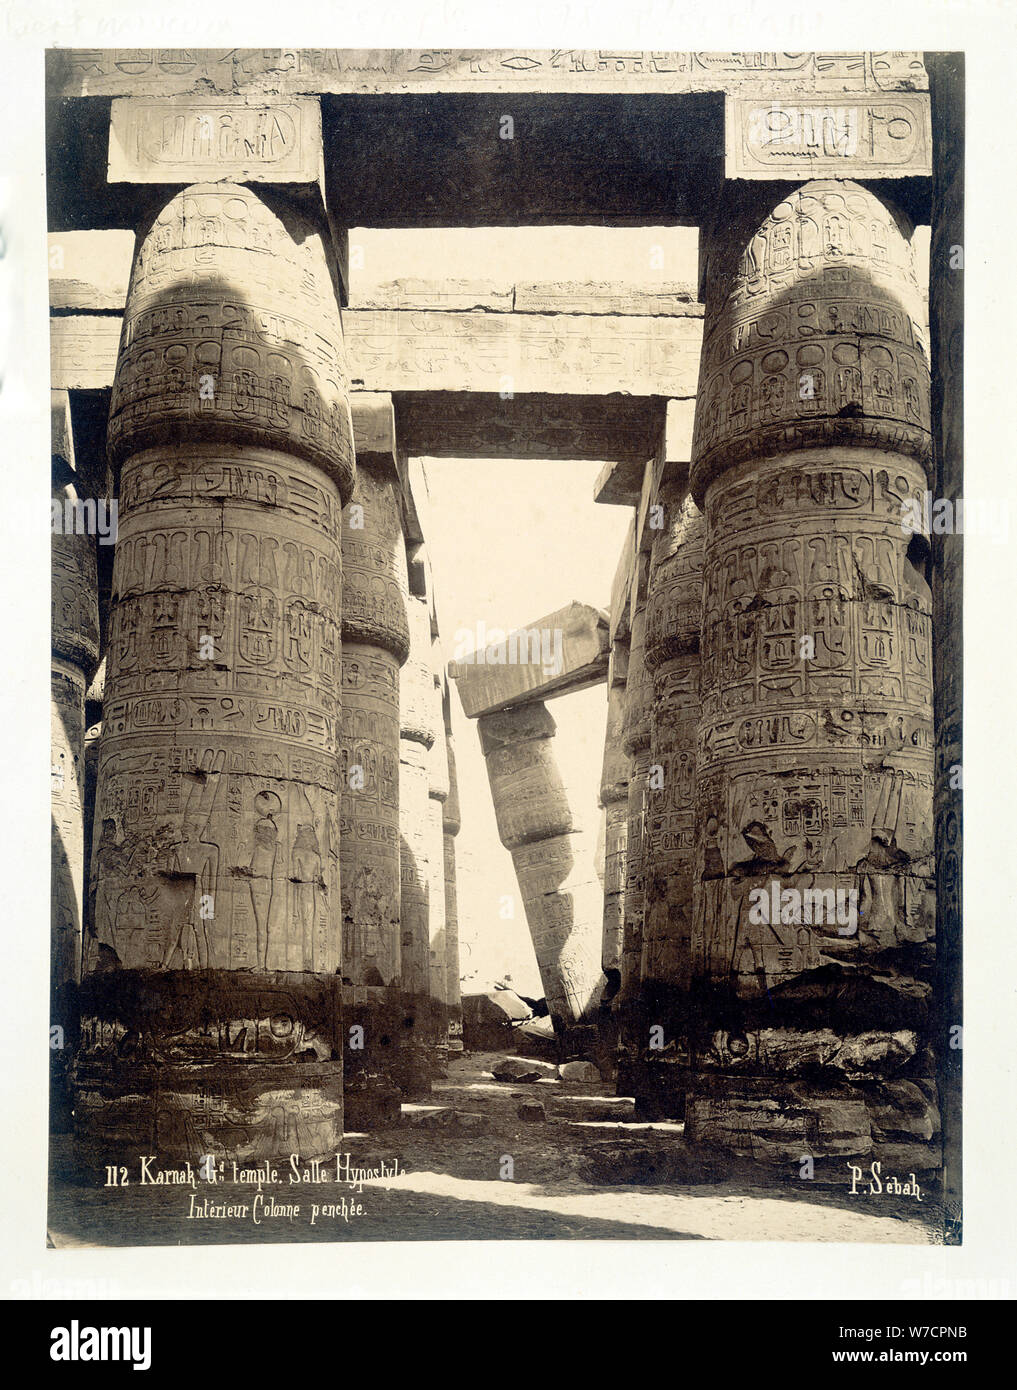 Hypostyle hall, temple of Amun-Re, Karnak, Egypt, 1878. Artist: P Sebah Stock Photo